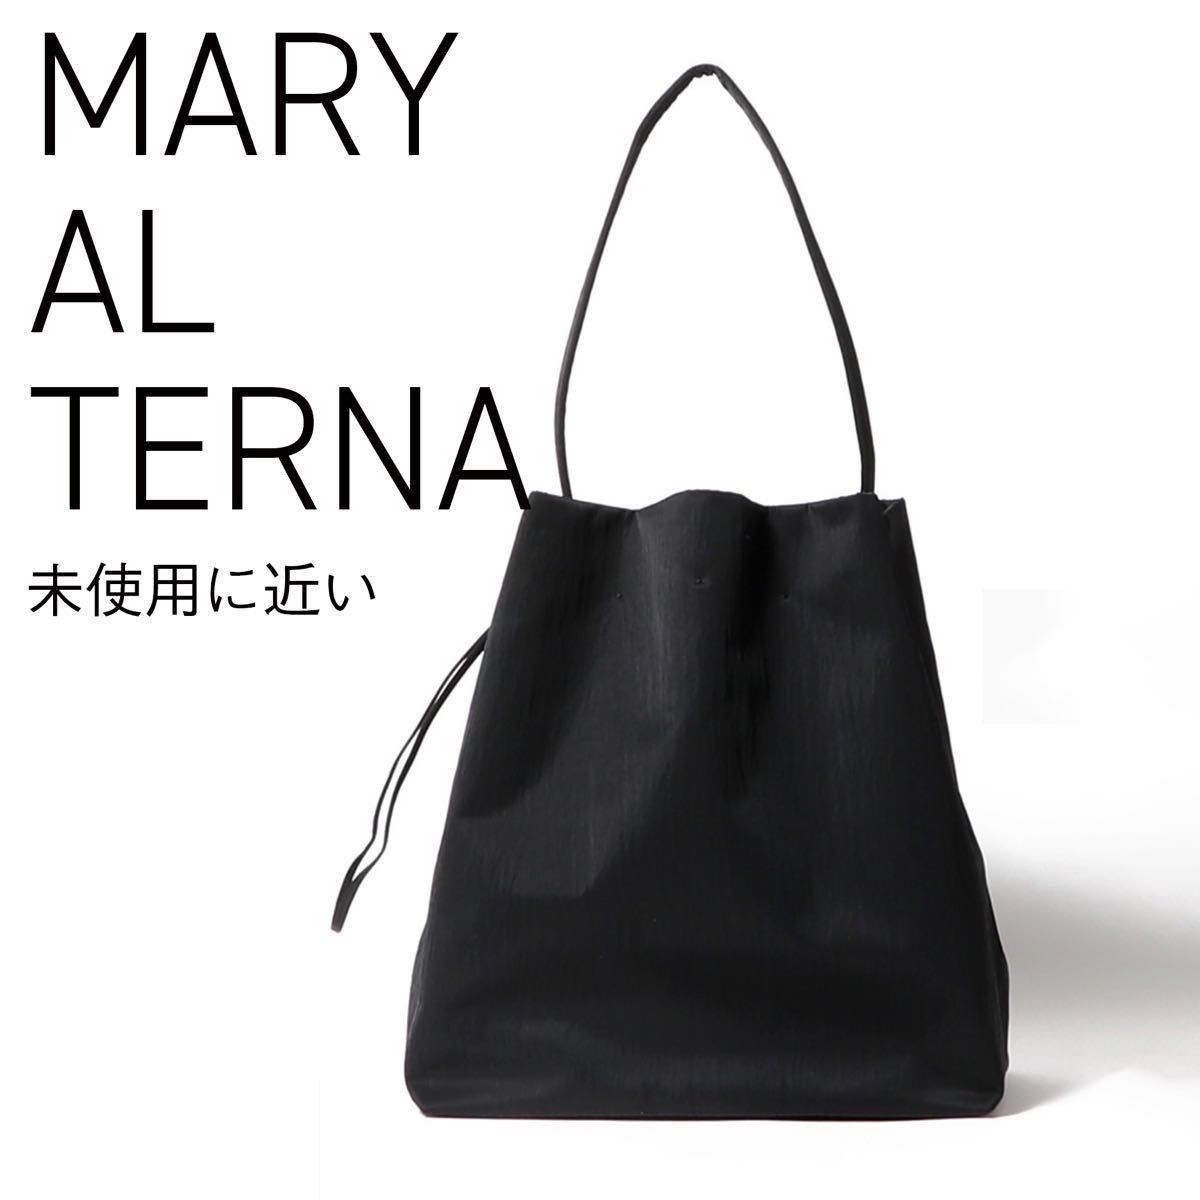 MARY AL TERNA / WRAPPING ワンショルダートートバッグ